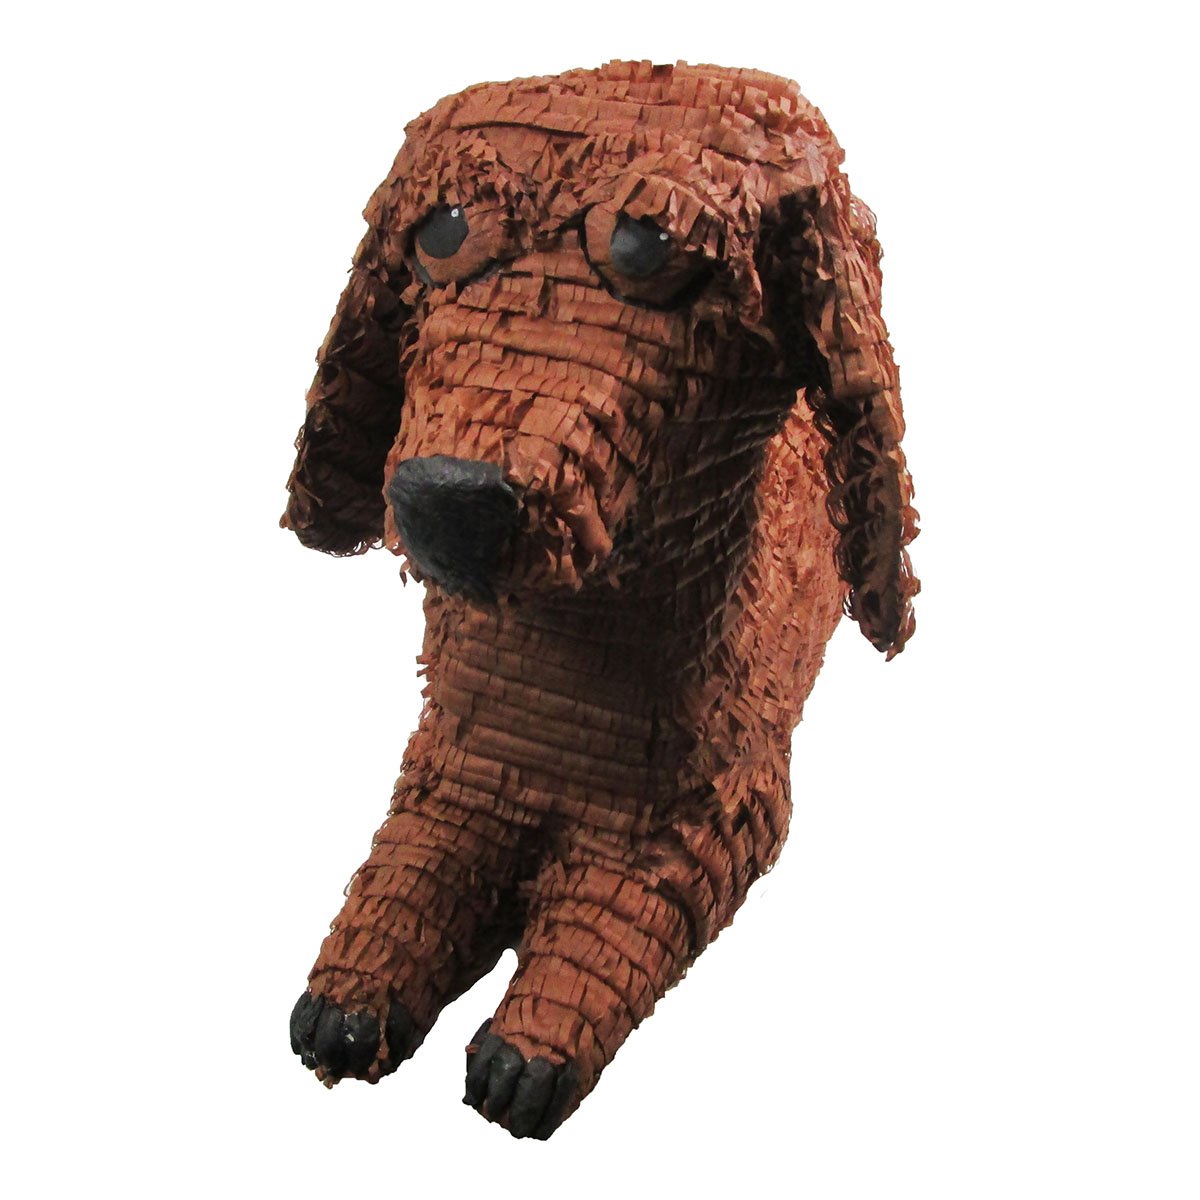 Custom Dog Pinata